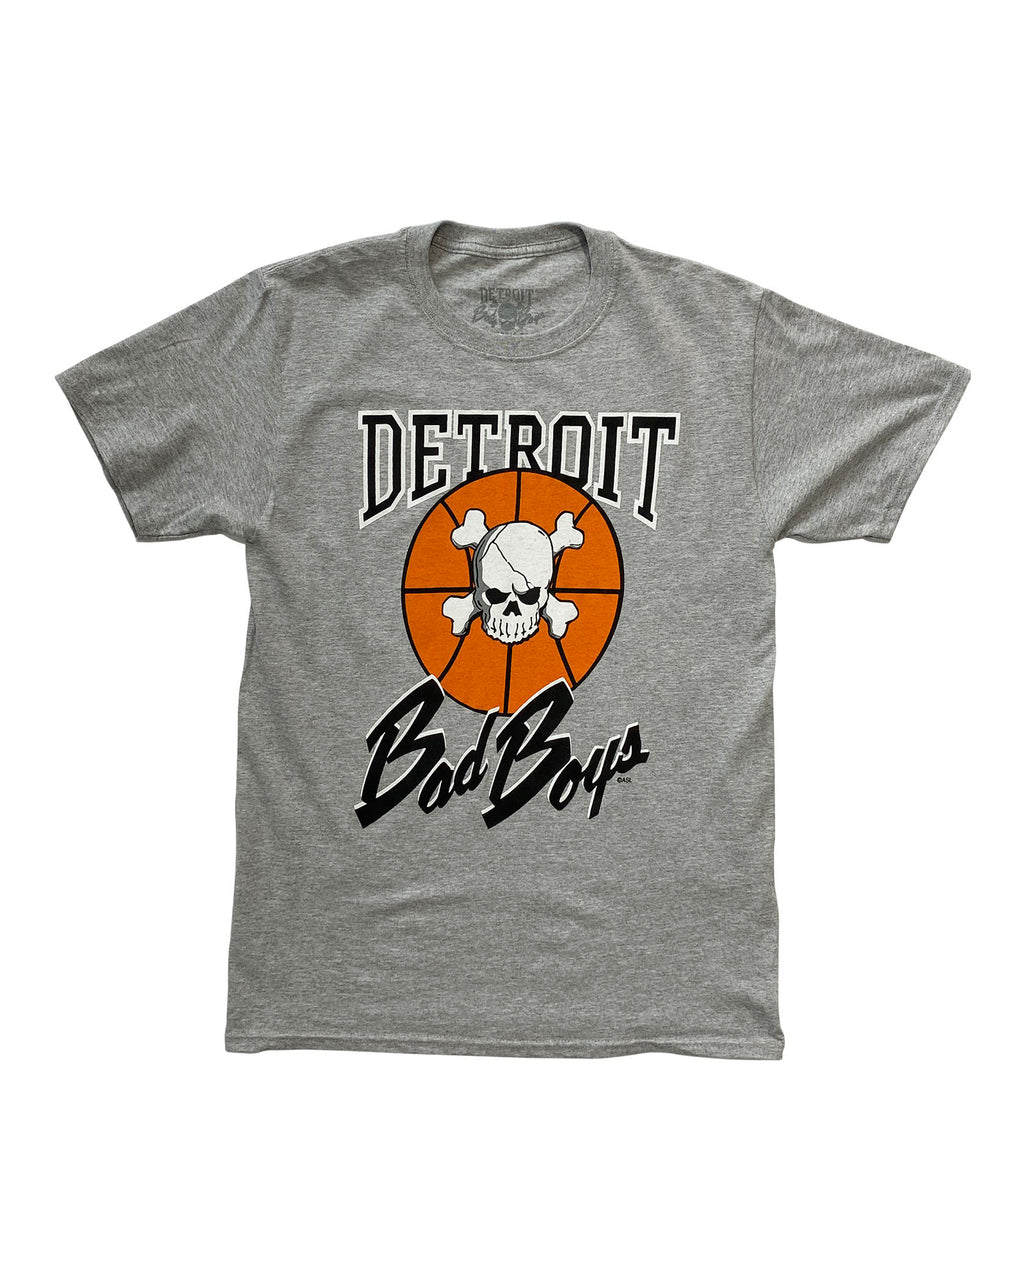 Authentic Detroit Bad Boys Grey T-Shirt